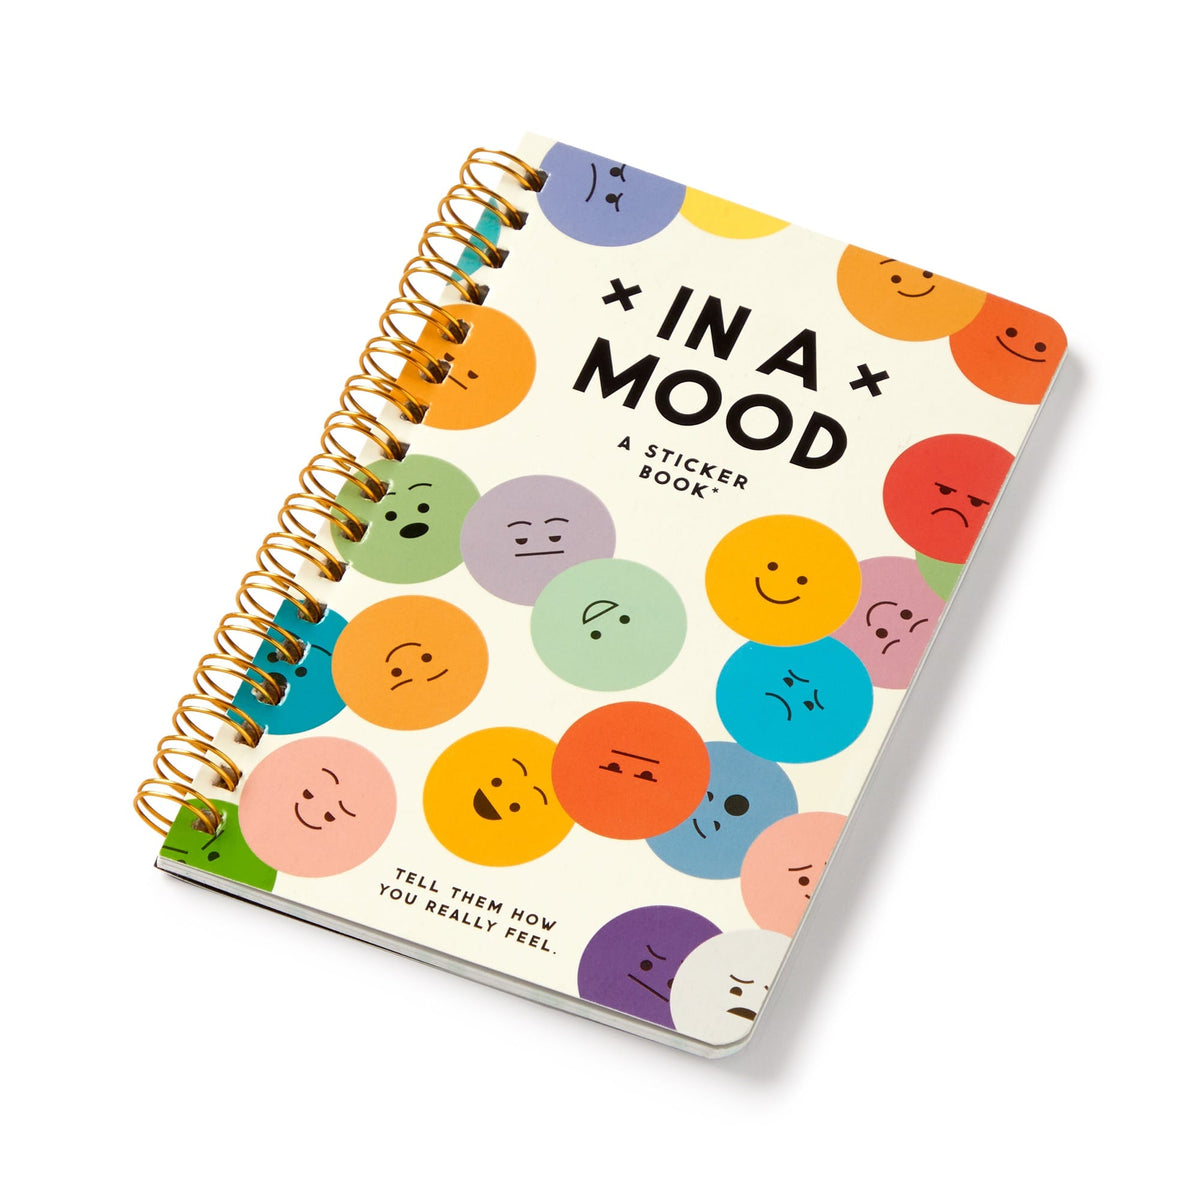 Shop Sticker Books - Planner, Words, Love Stickers & More